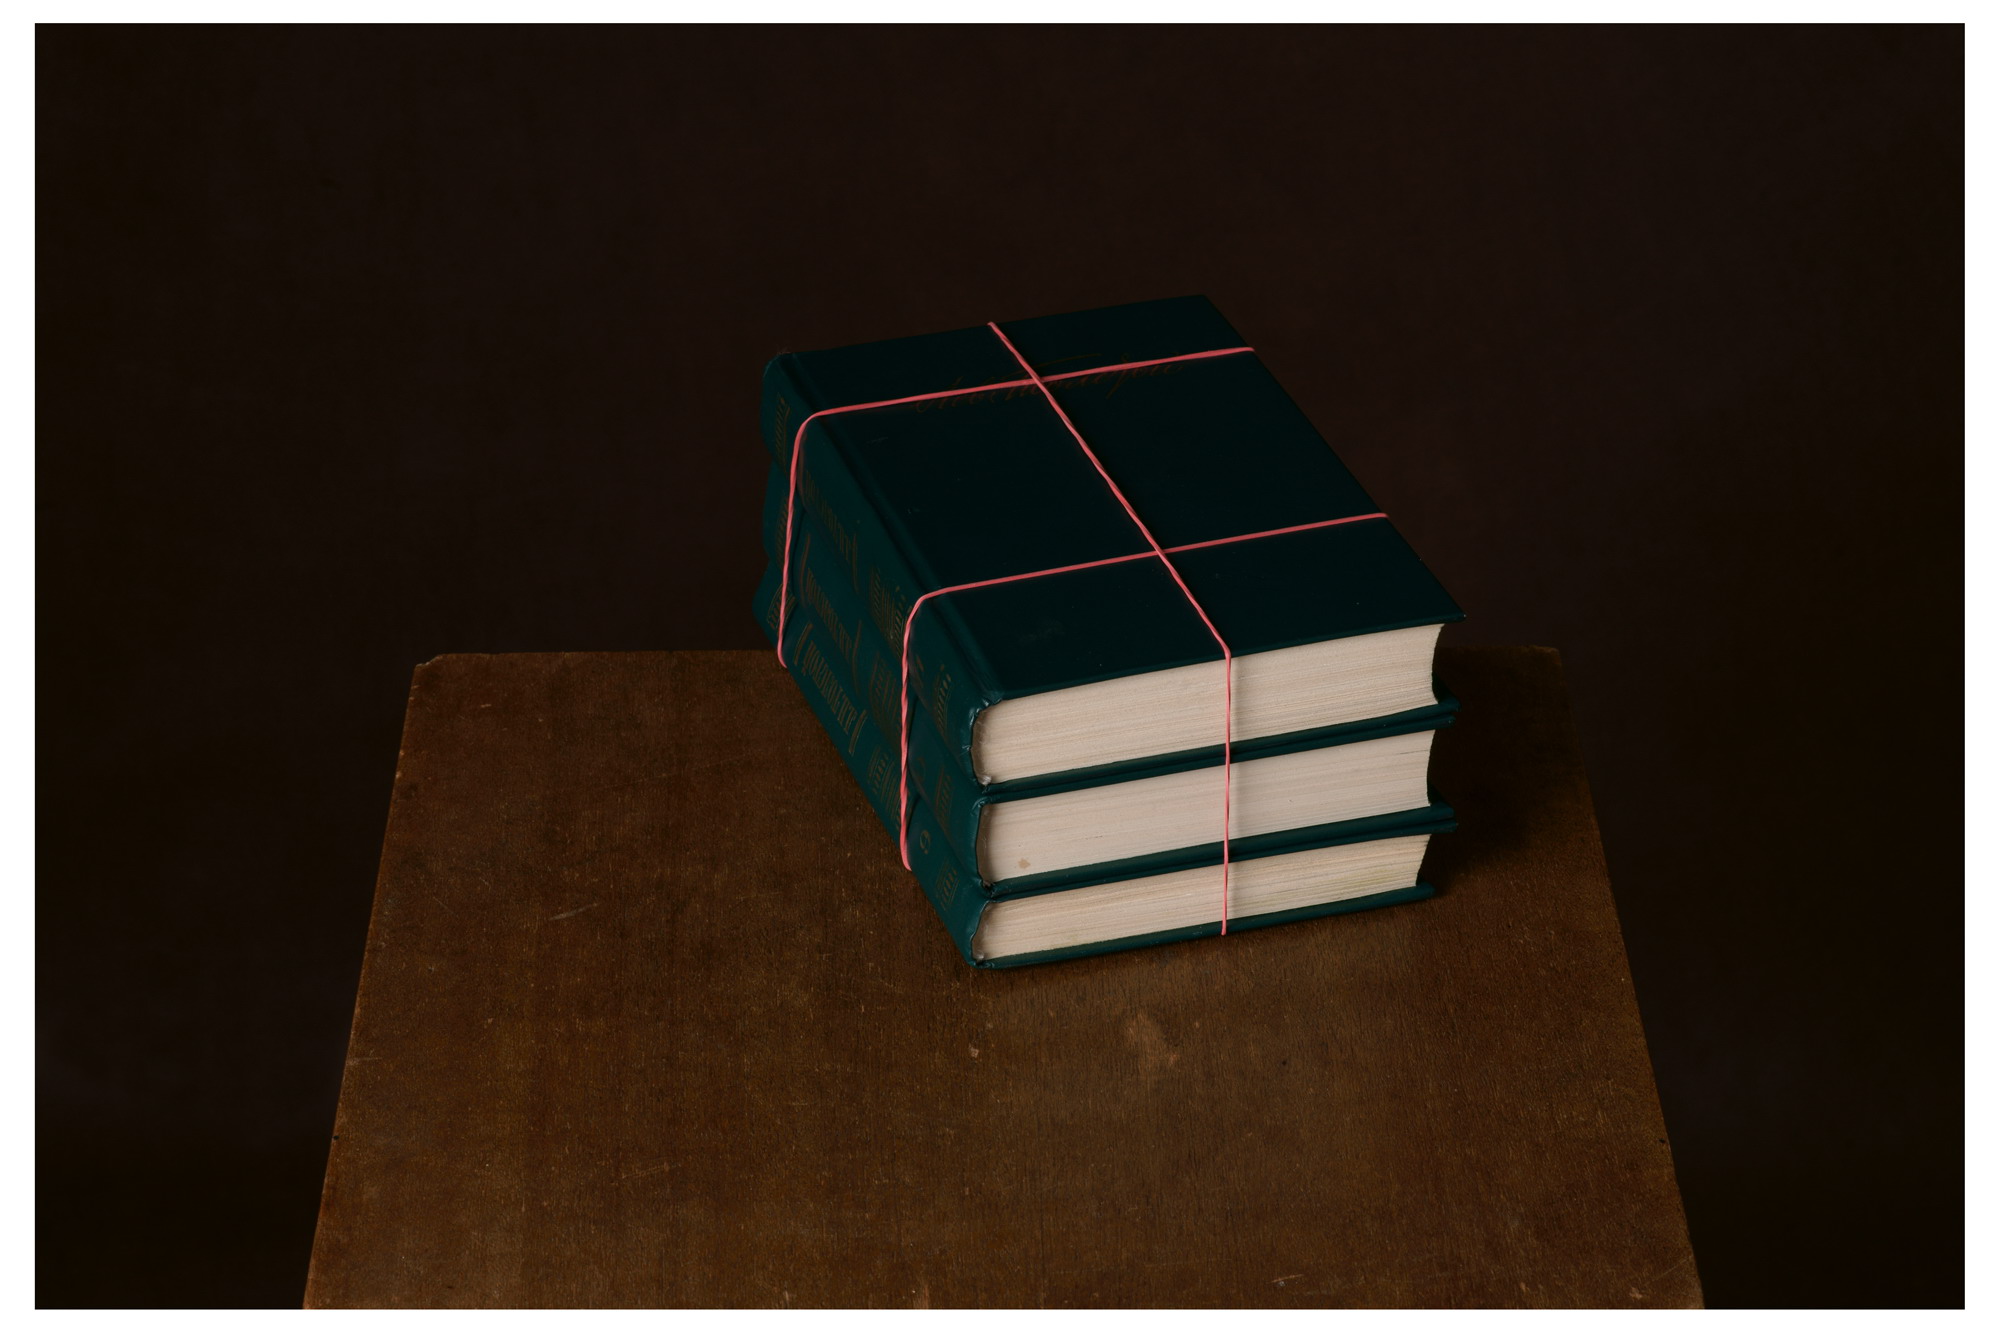  "Circle of Reading #1," 2010, digital c-print, 15x23.5 in. 